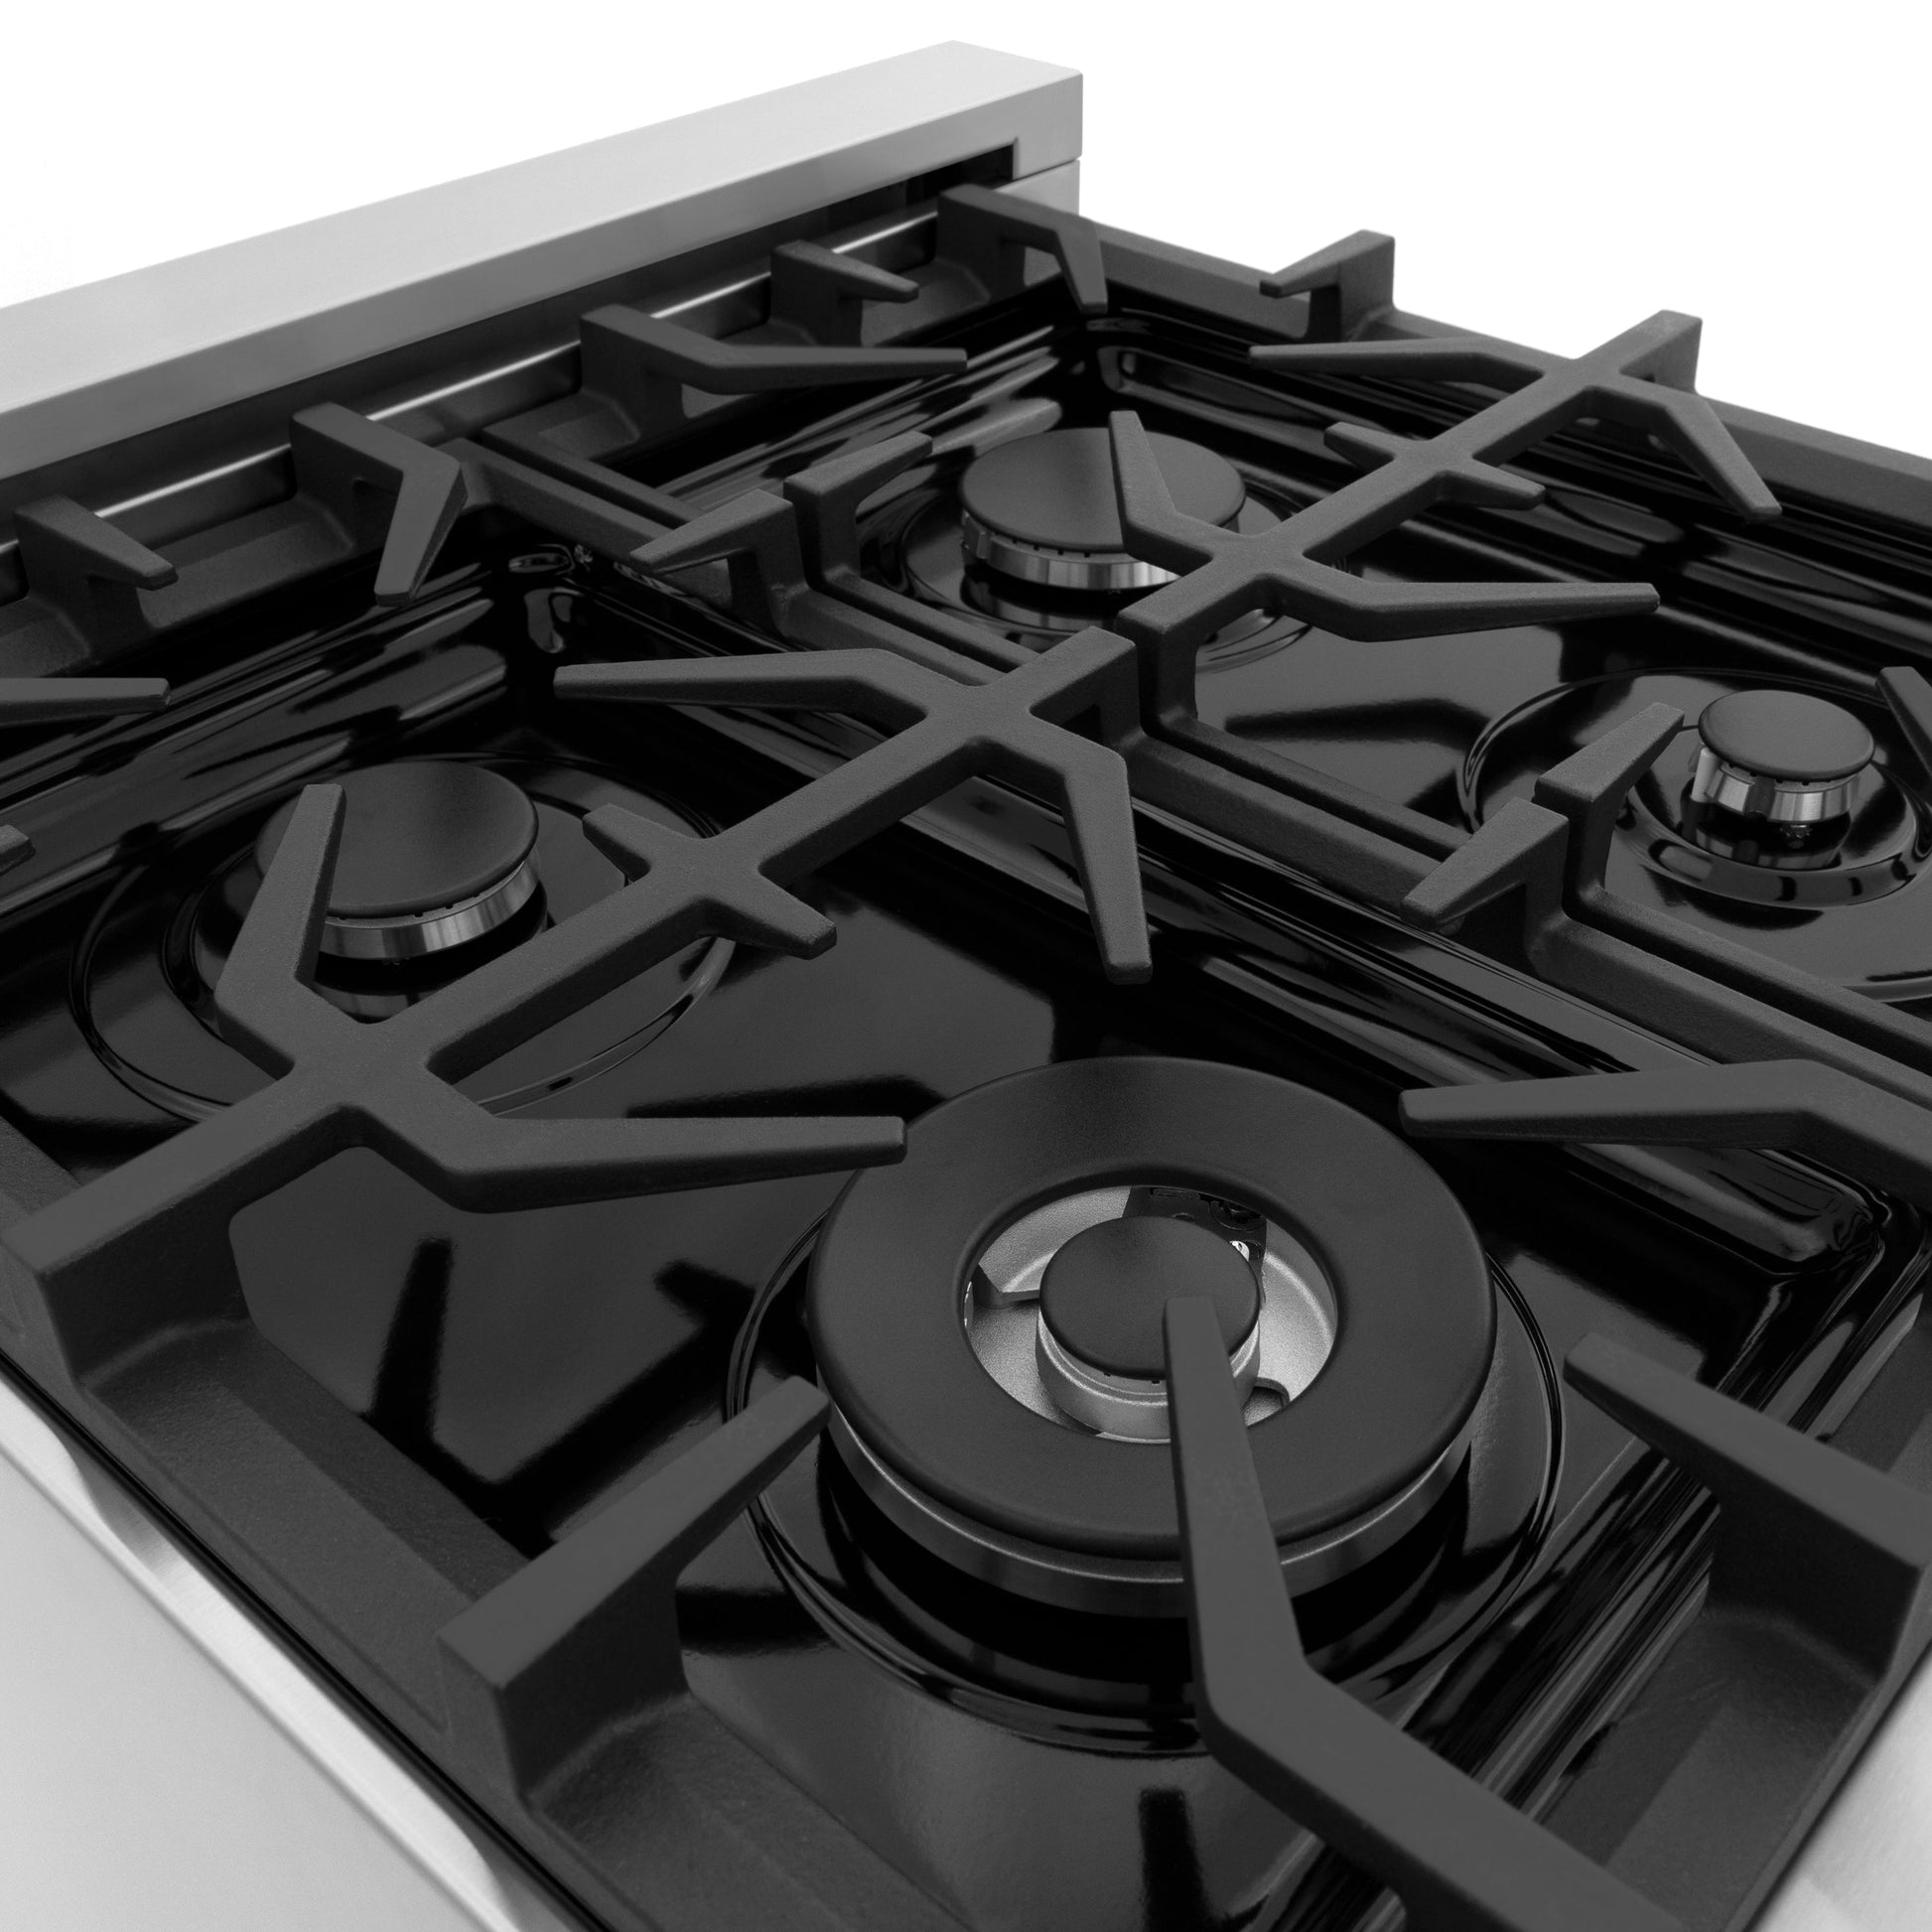 ZLINE 30" 2-Appliance Kitchen Package with Stainless Steel Dual Fuel Range with Matte Black Door & Convertible Vent Range Hood